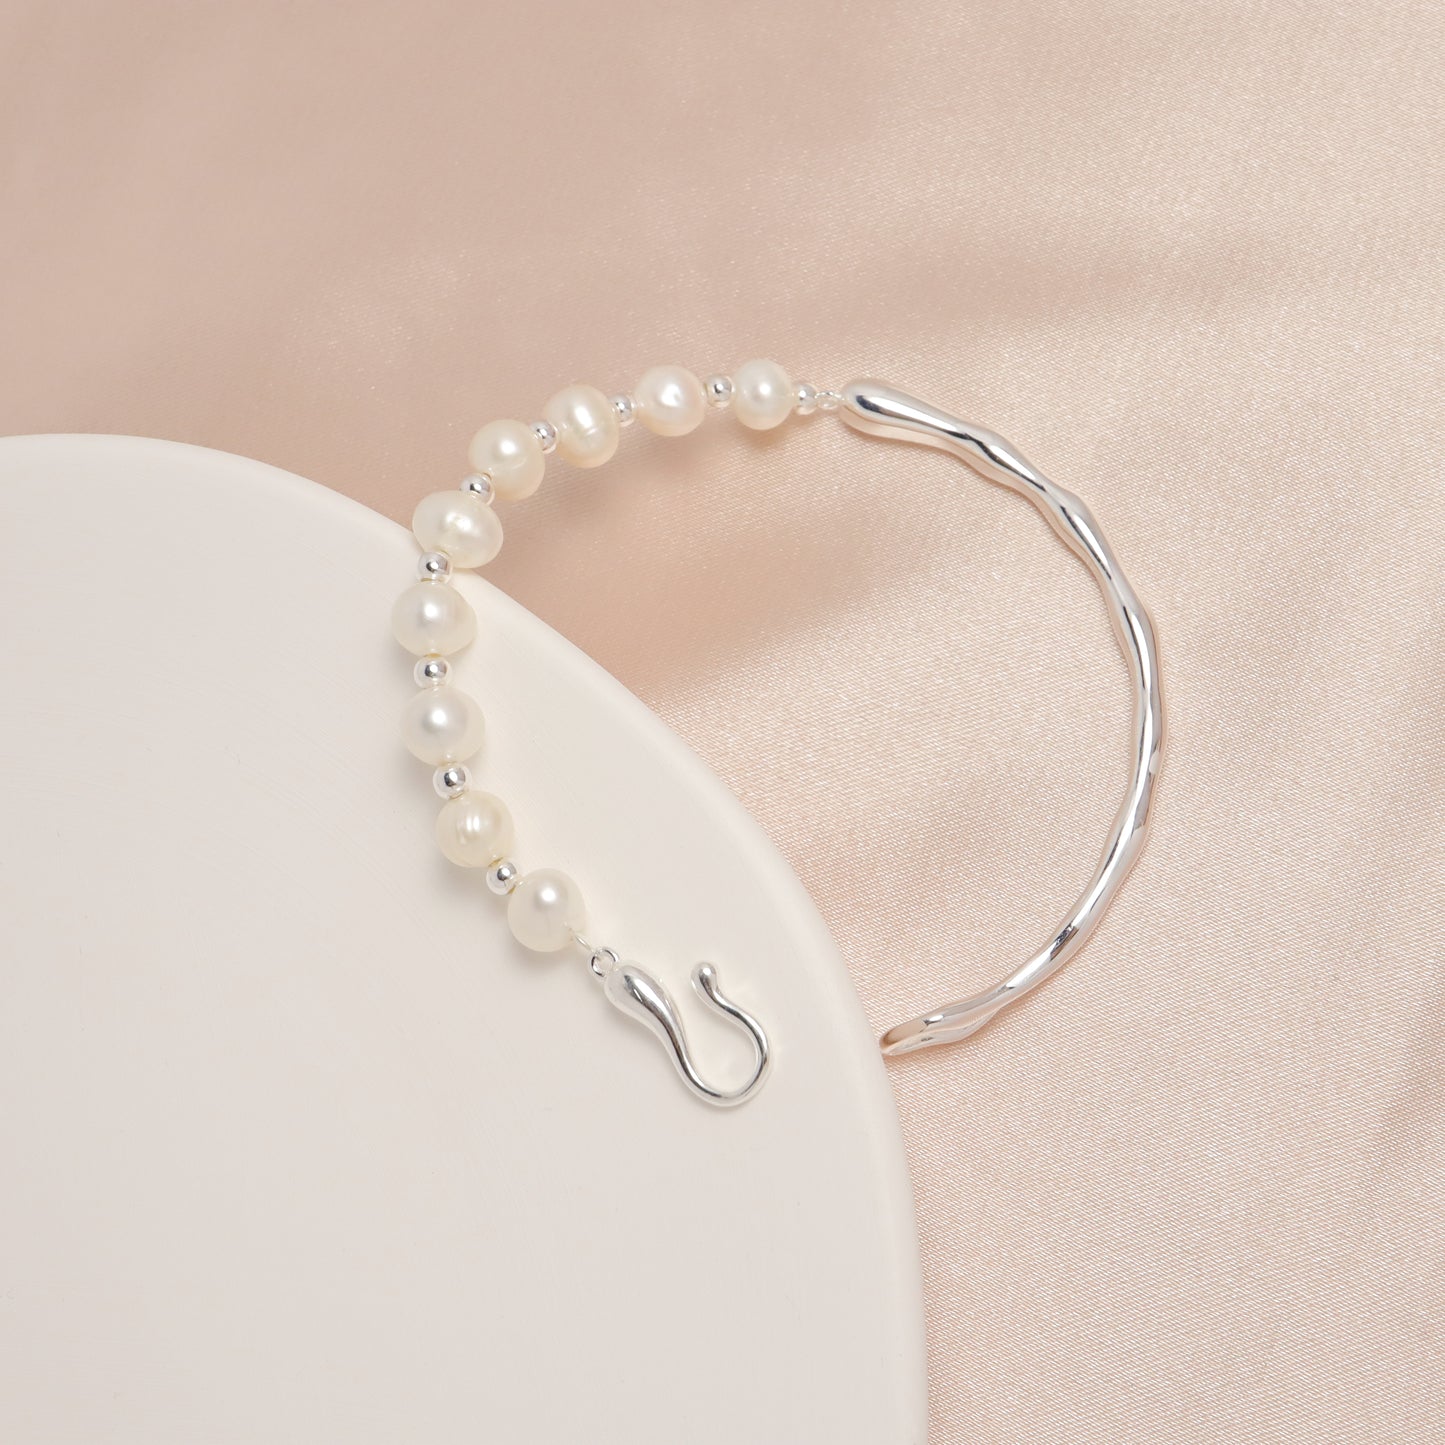 KISS Ilsa -  S925 Sterling Silver & Freshwater Pearl Bracelet with Hook Lock